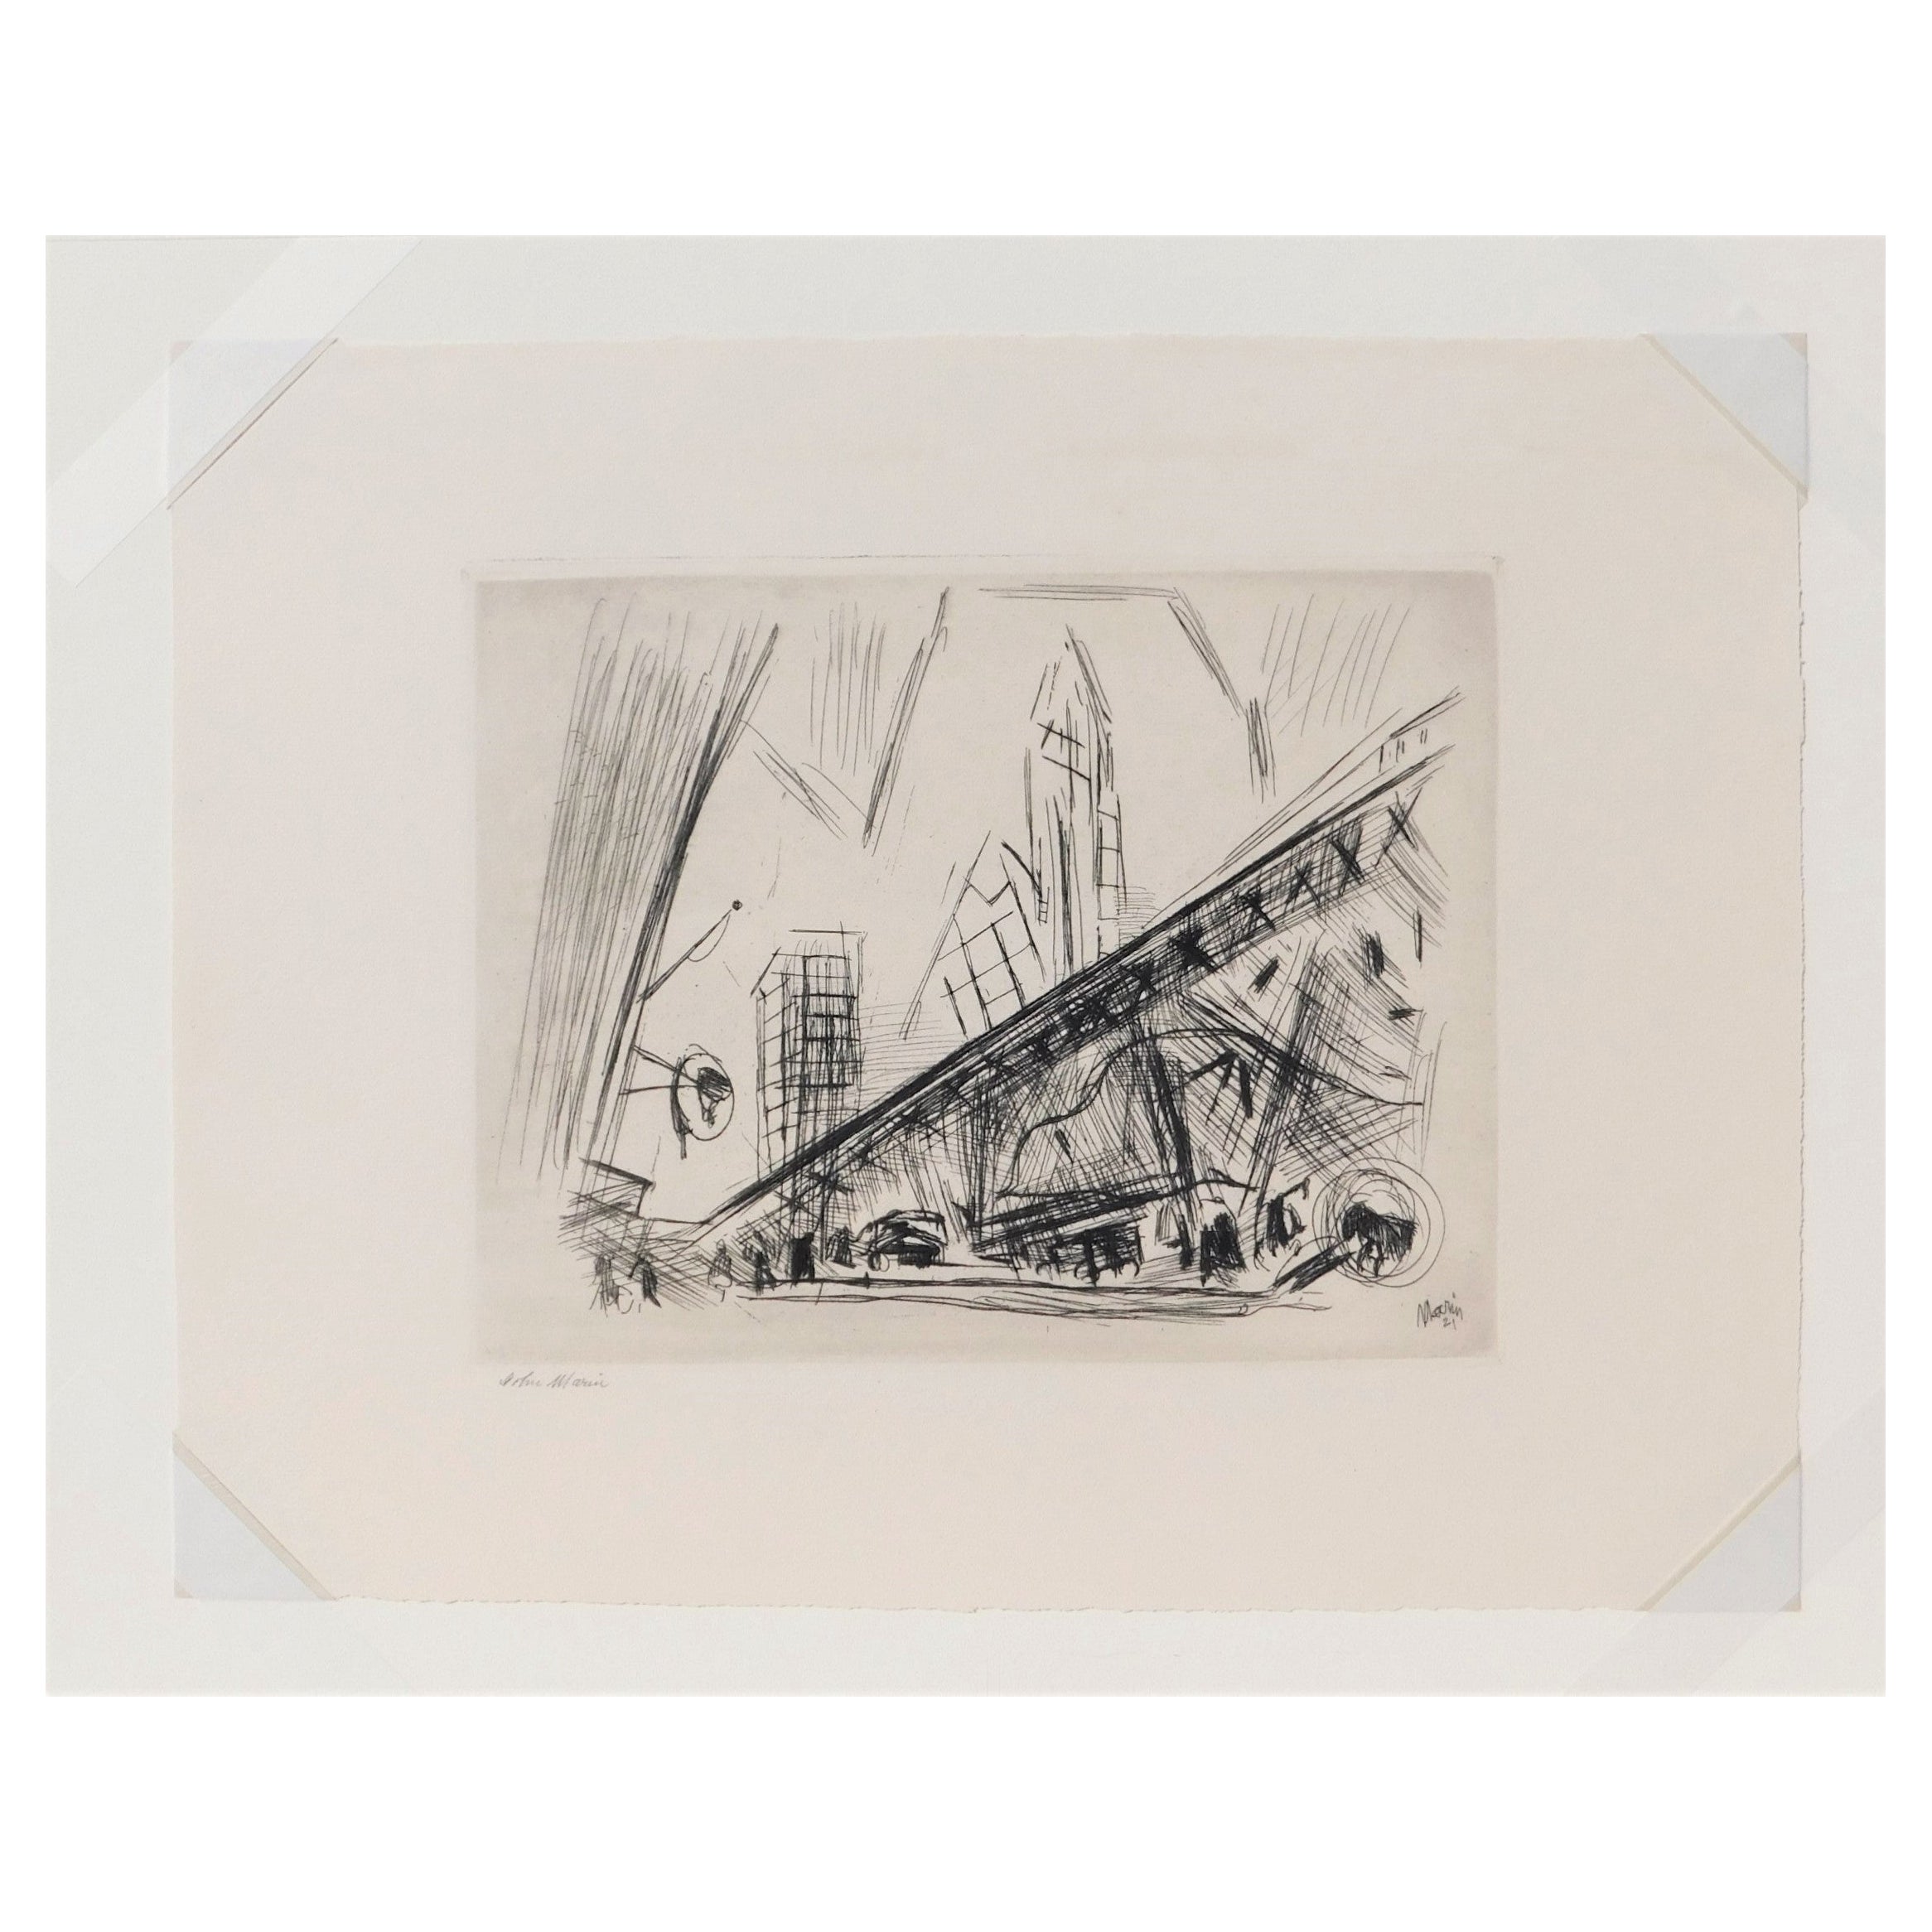 John Marin Etching, 1921 - “Downtown, the El”